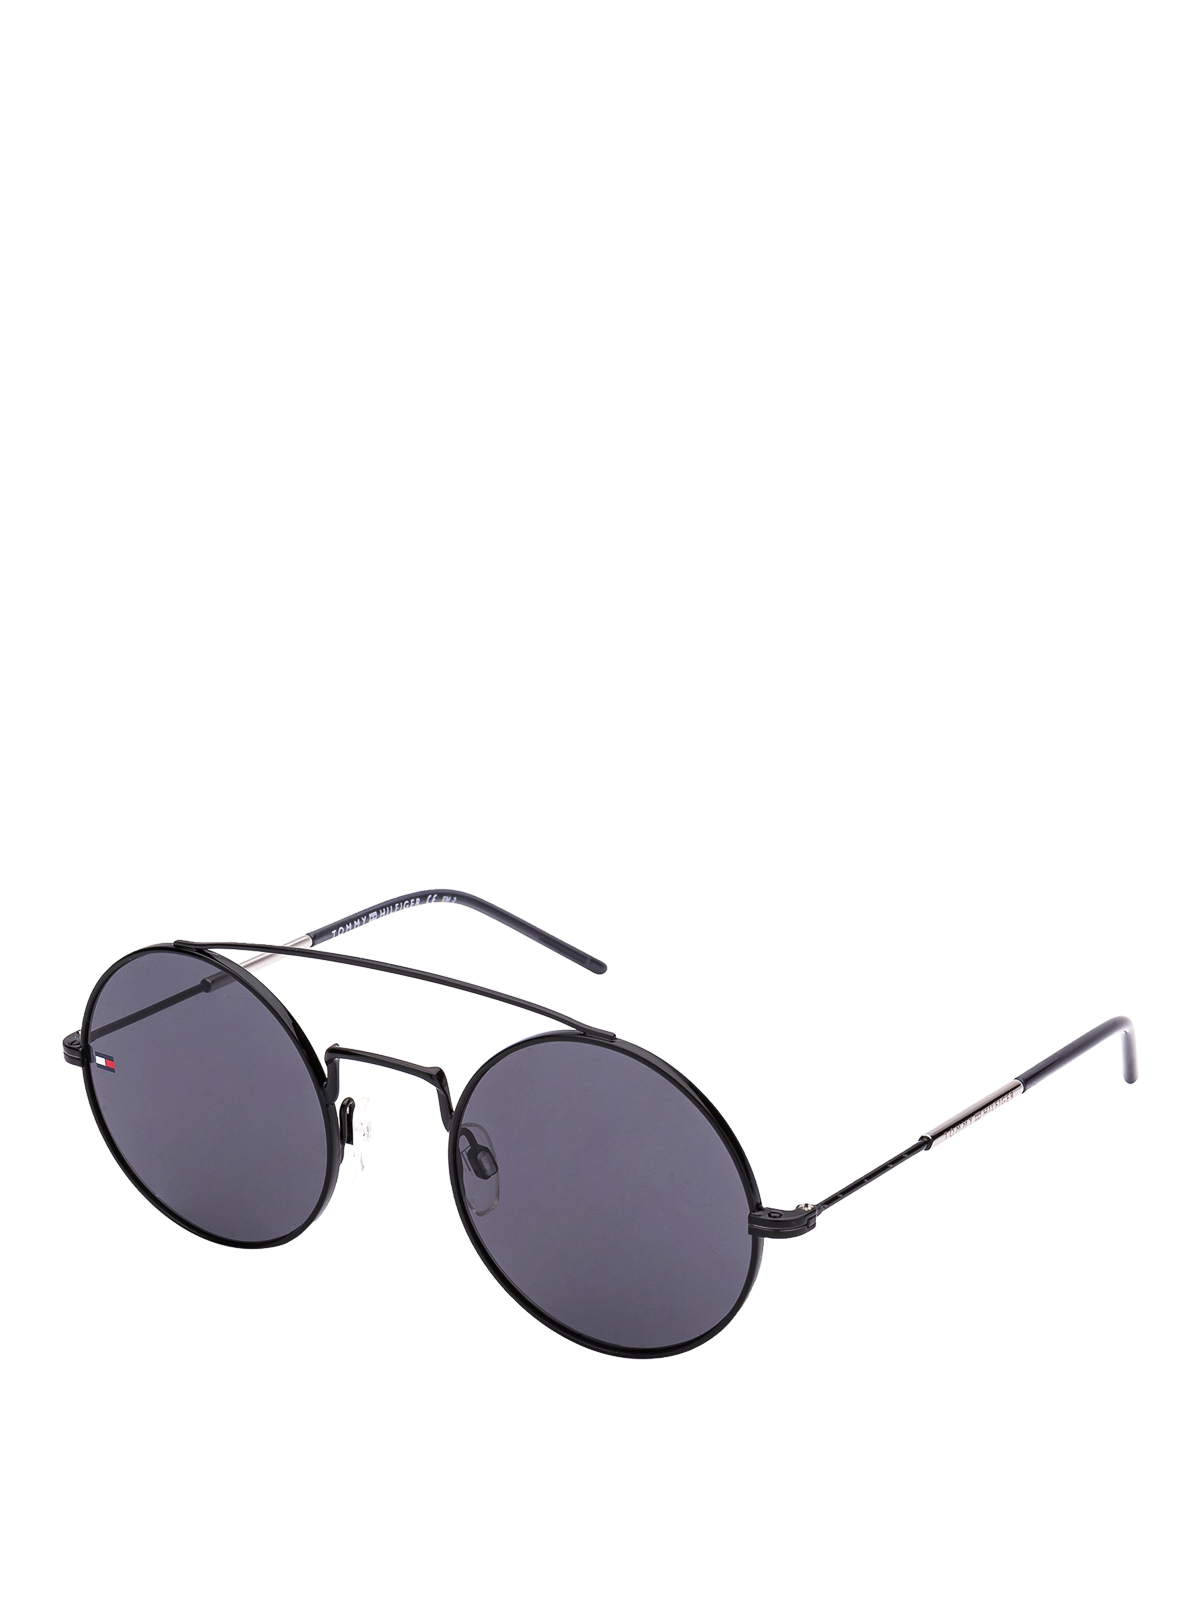 tommy hilfiger round sunglasses